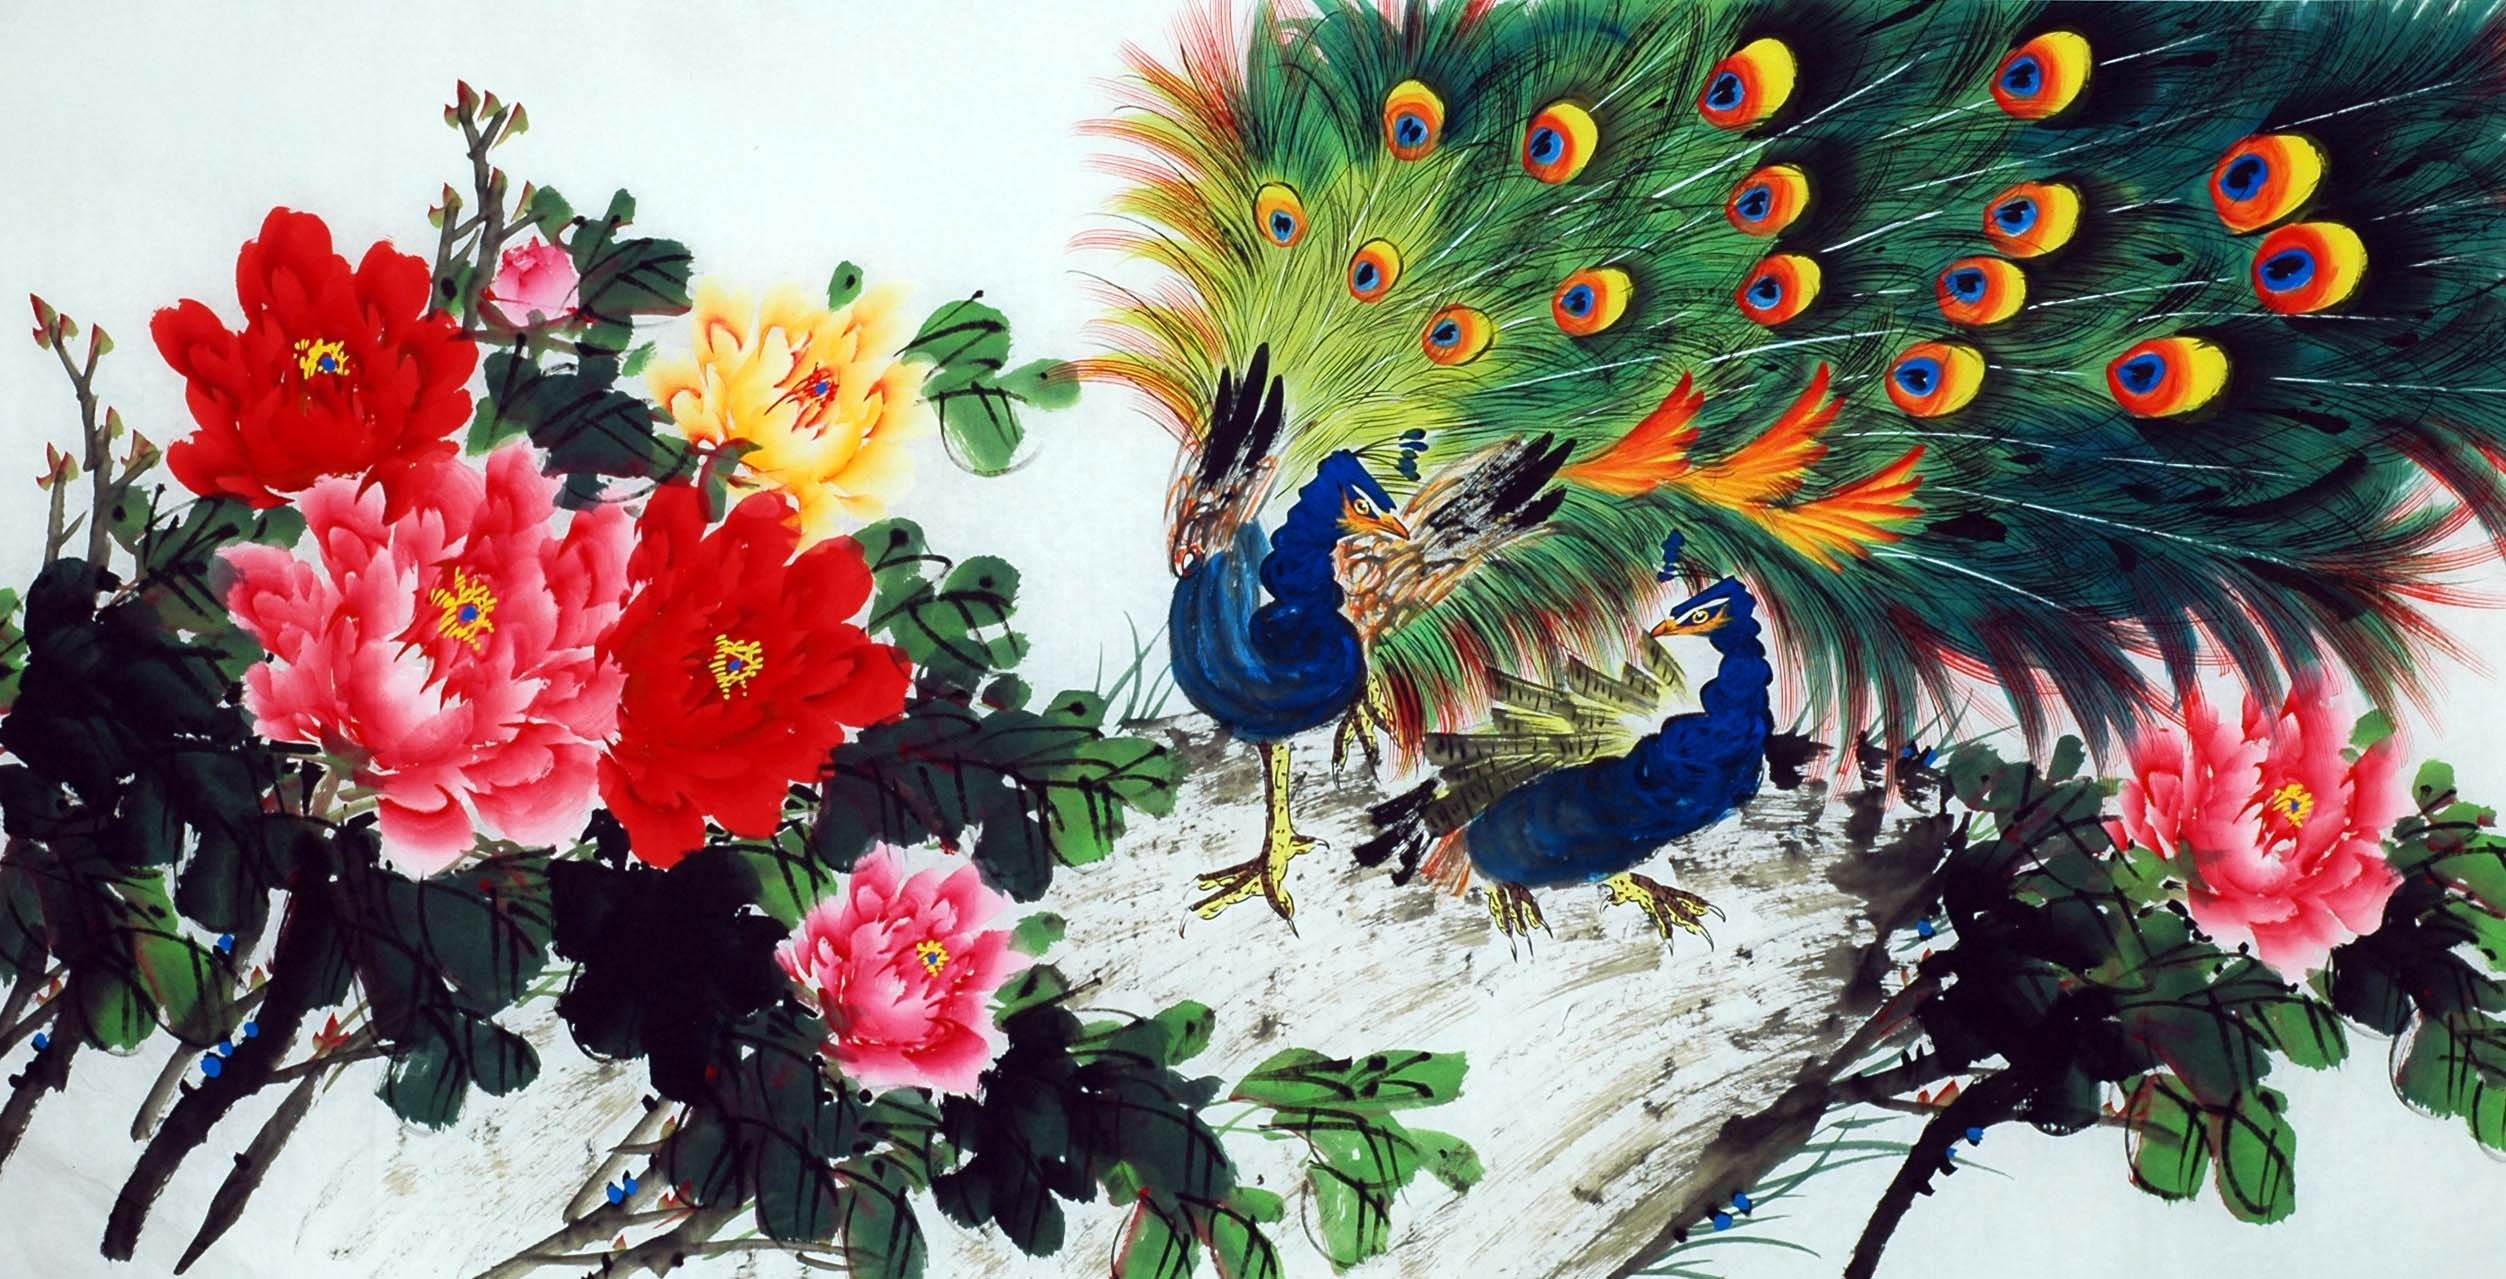 Chinese Peacock Painting - CNAG010700